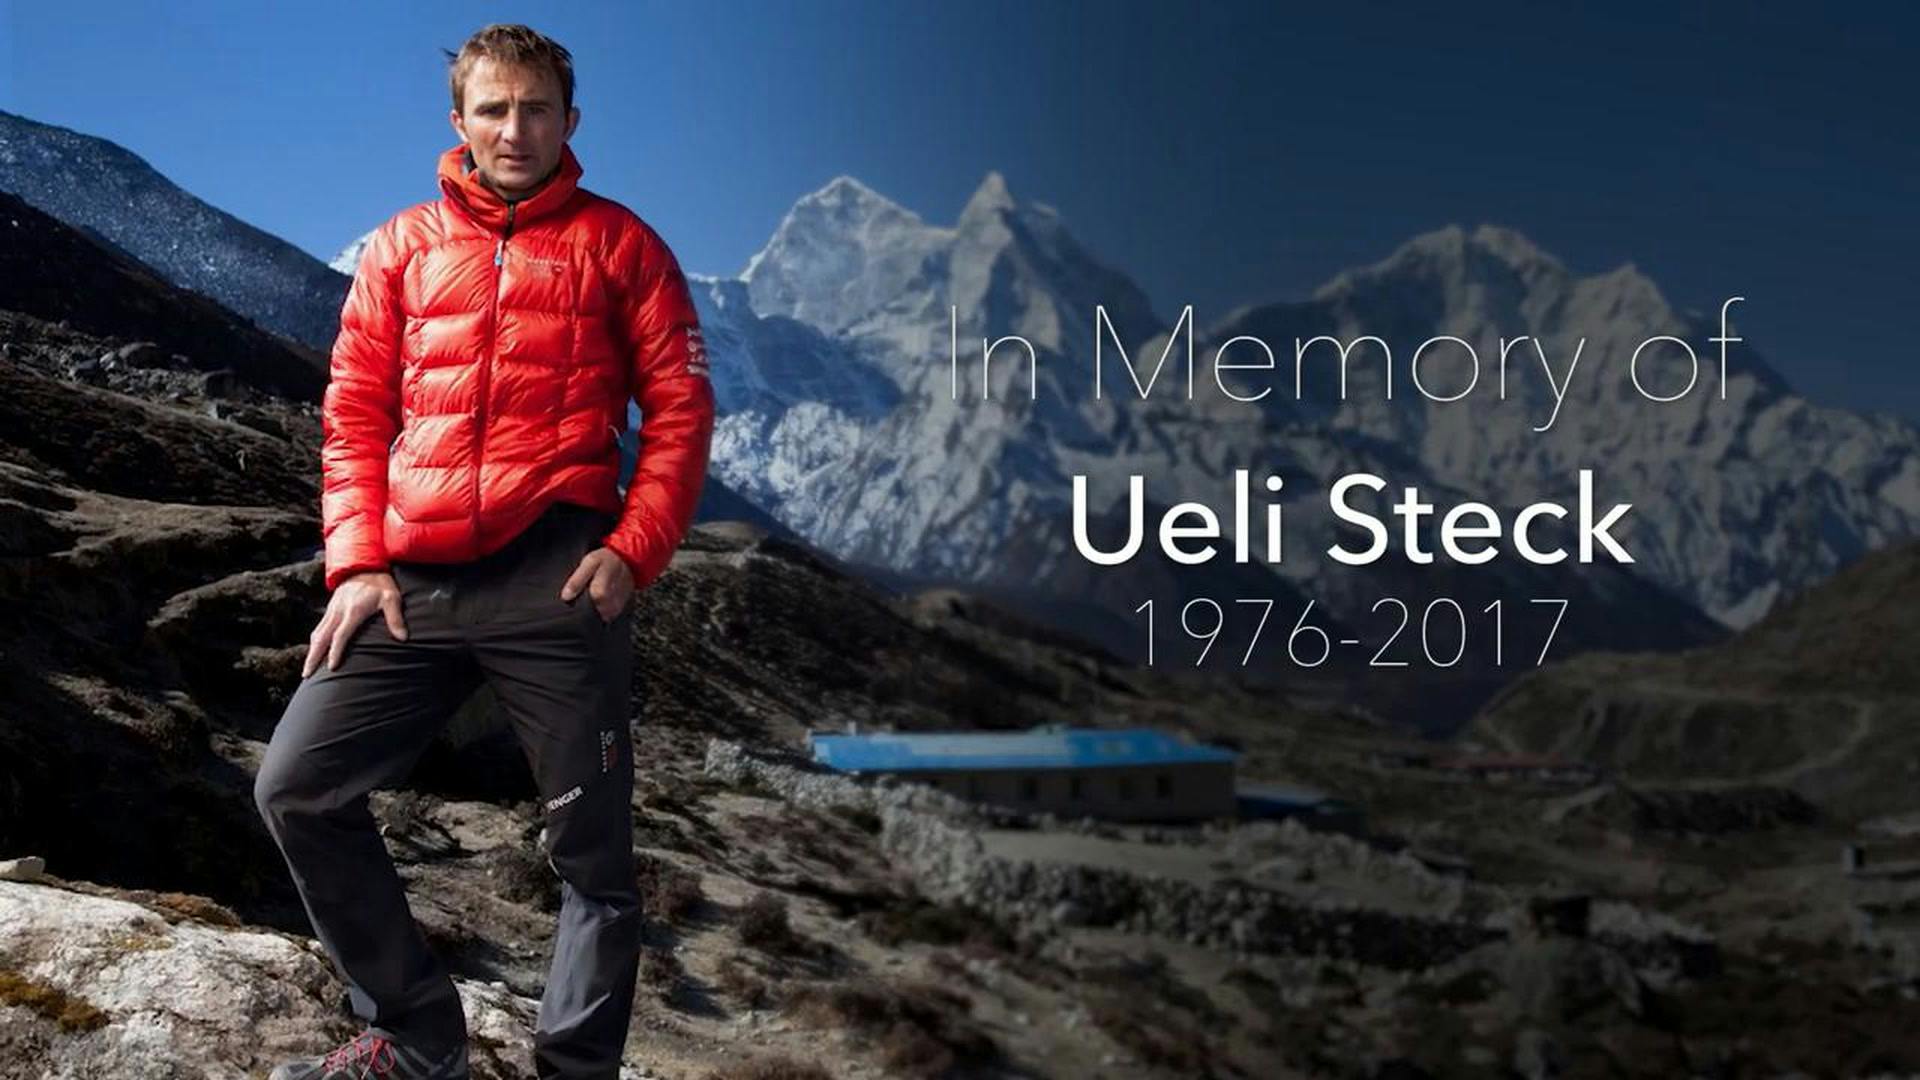 In Memory of Ueli Steck